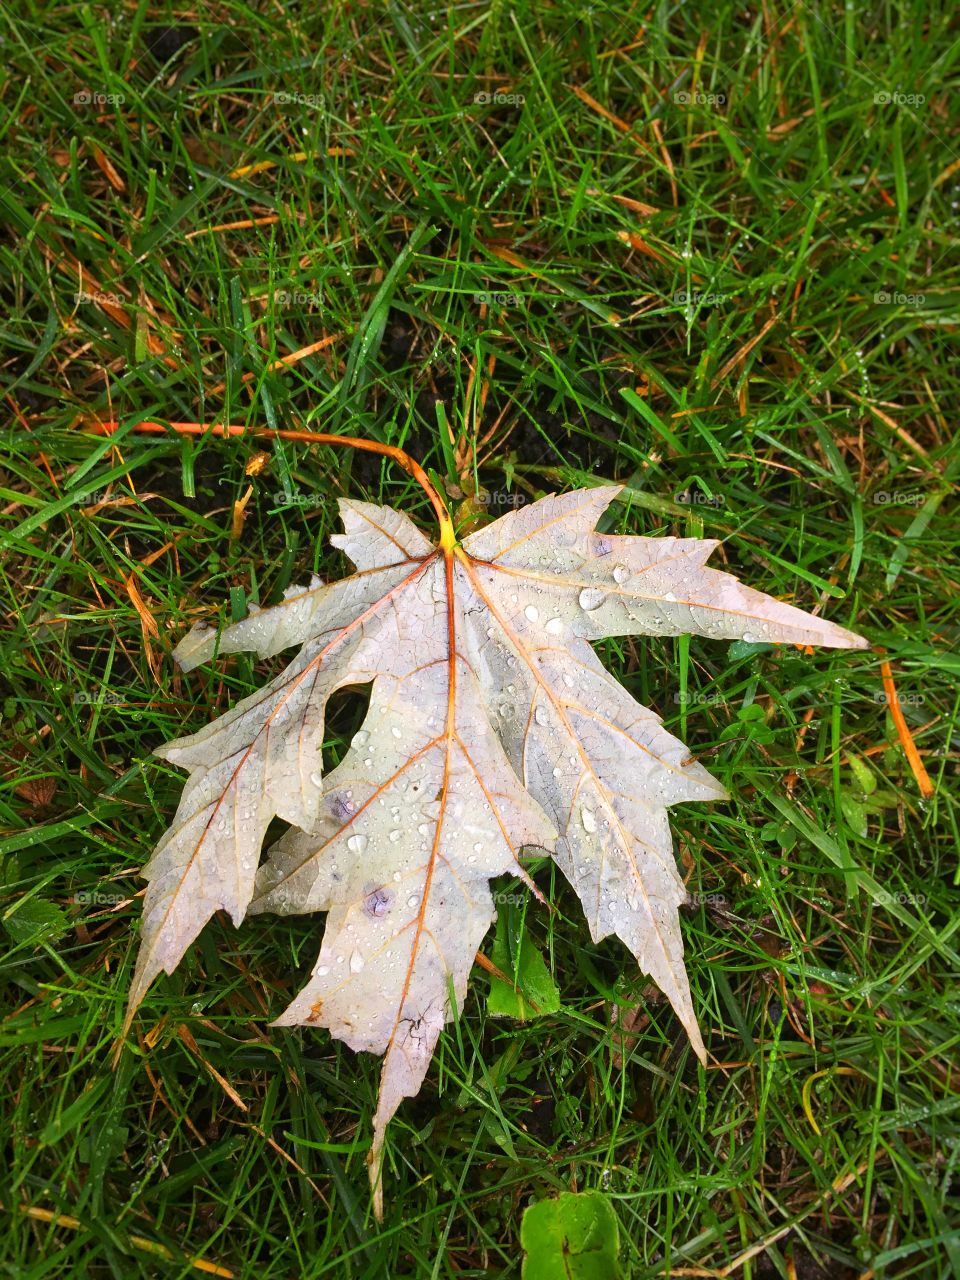 Autumn leaf fallen with dew drops